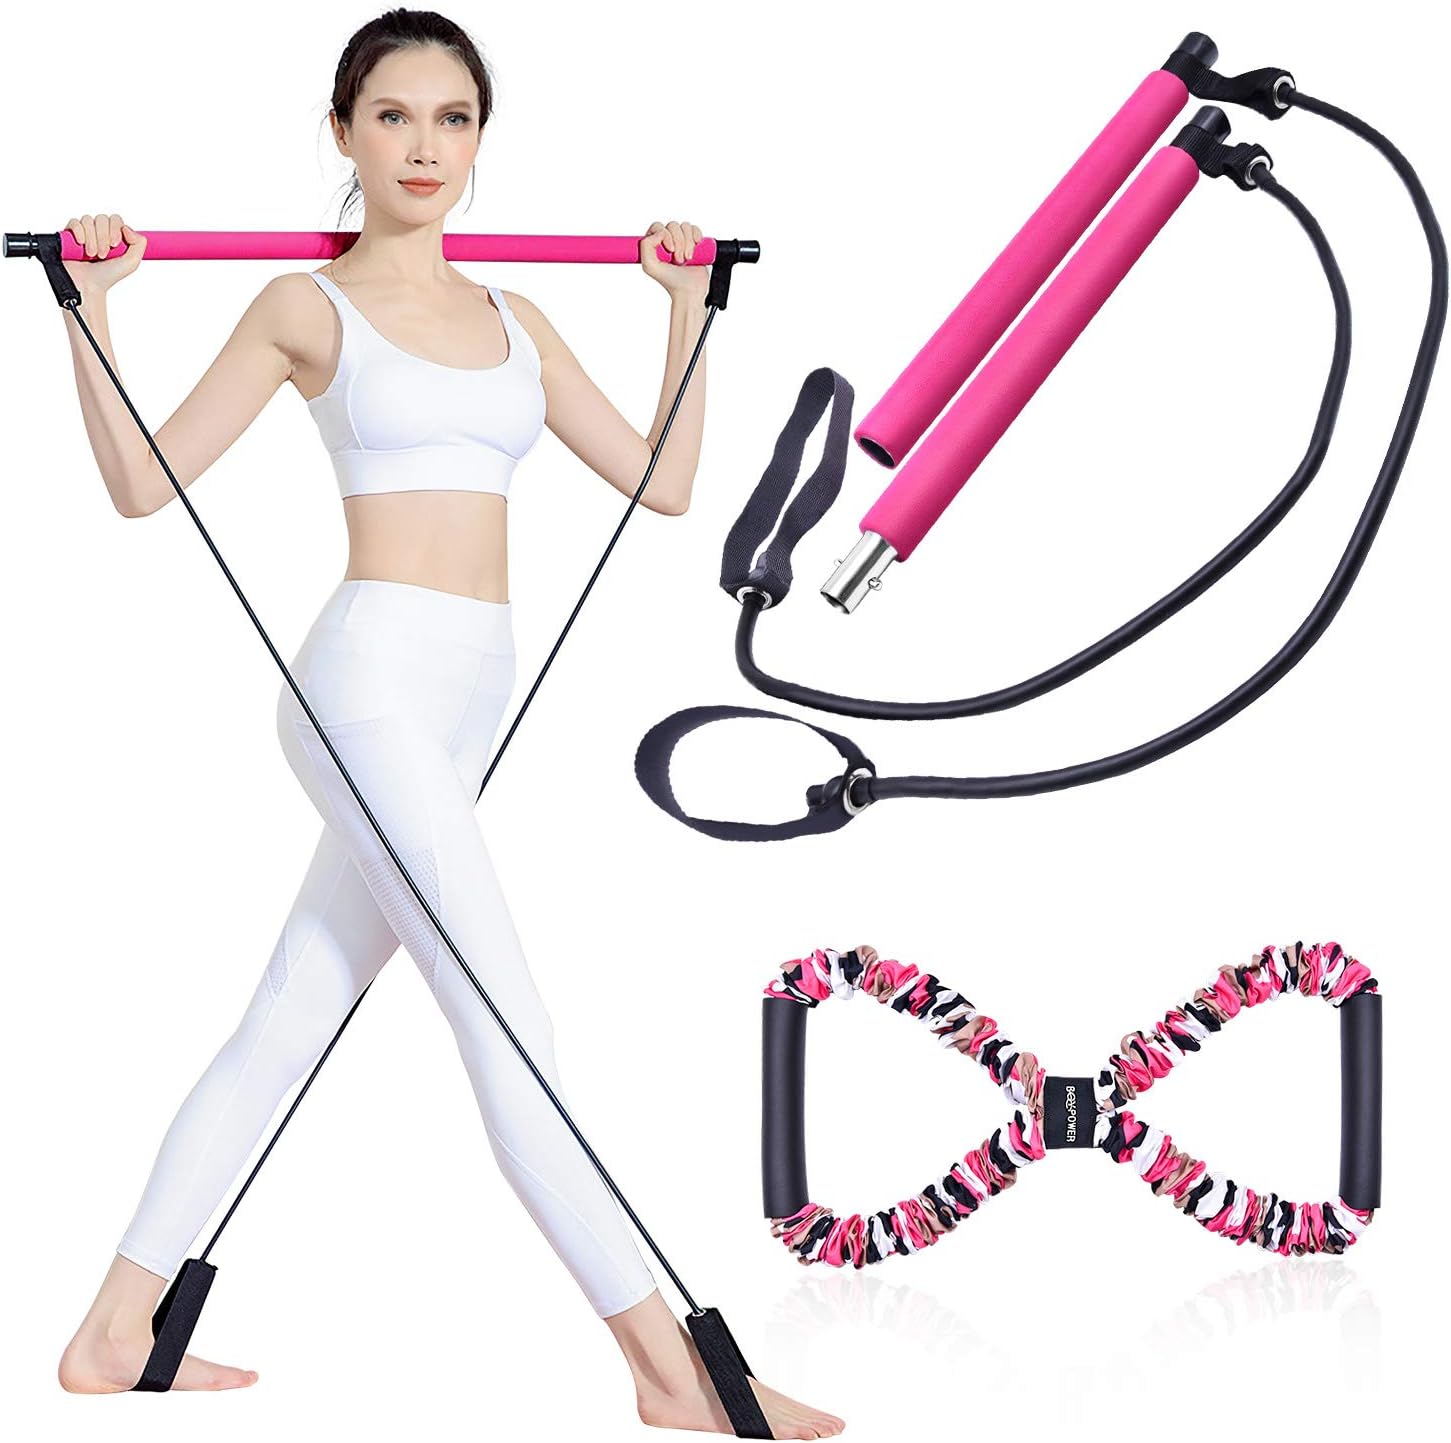 Portable Pilates Bar Kit Home Exercise Stick With Resistance Band Toning Gym UK